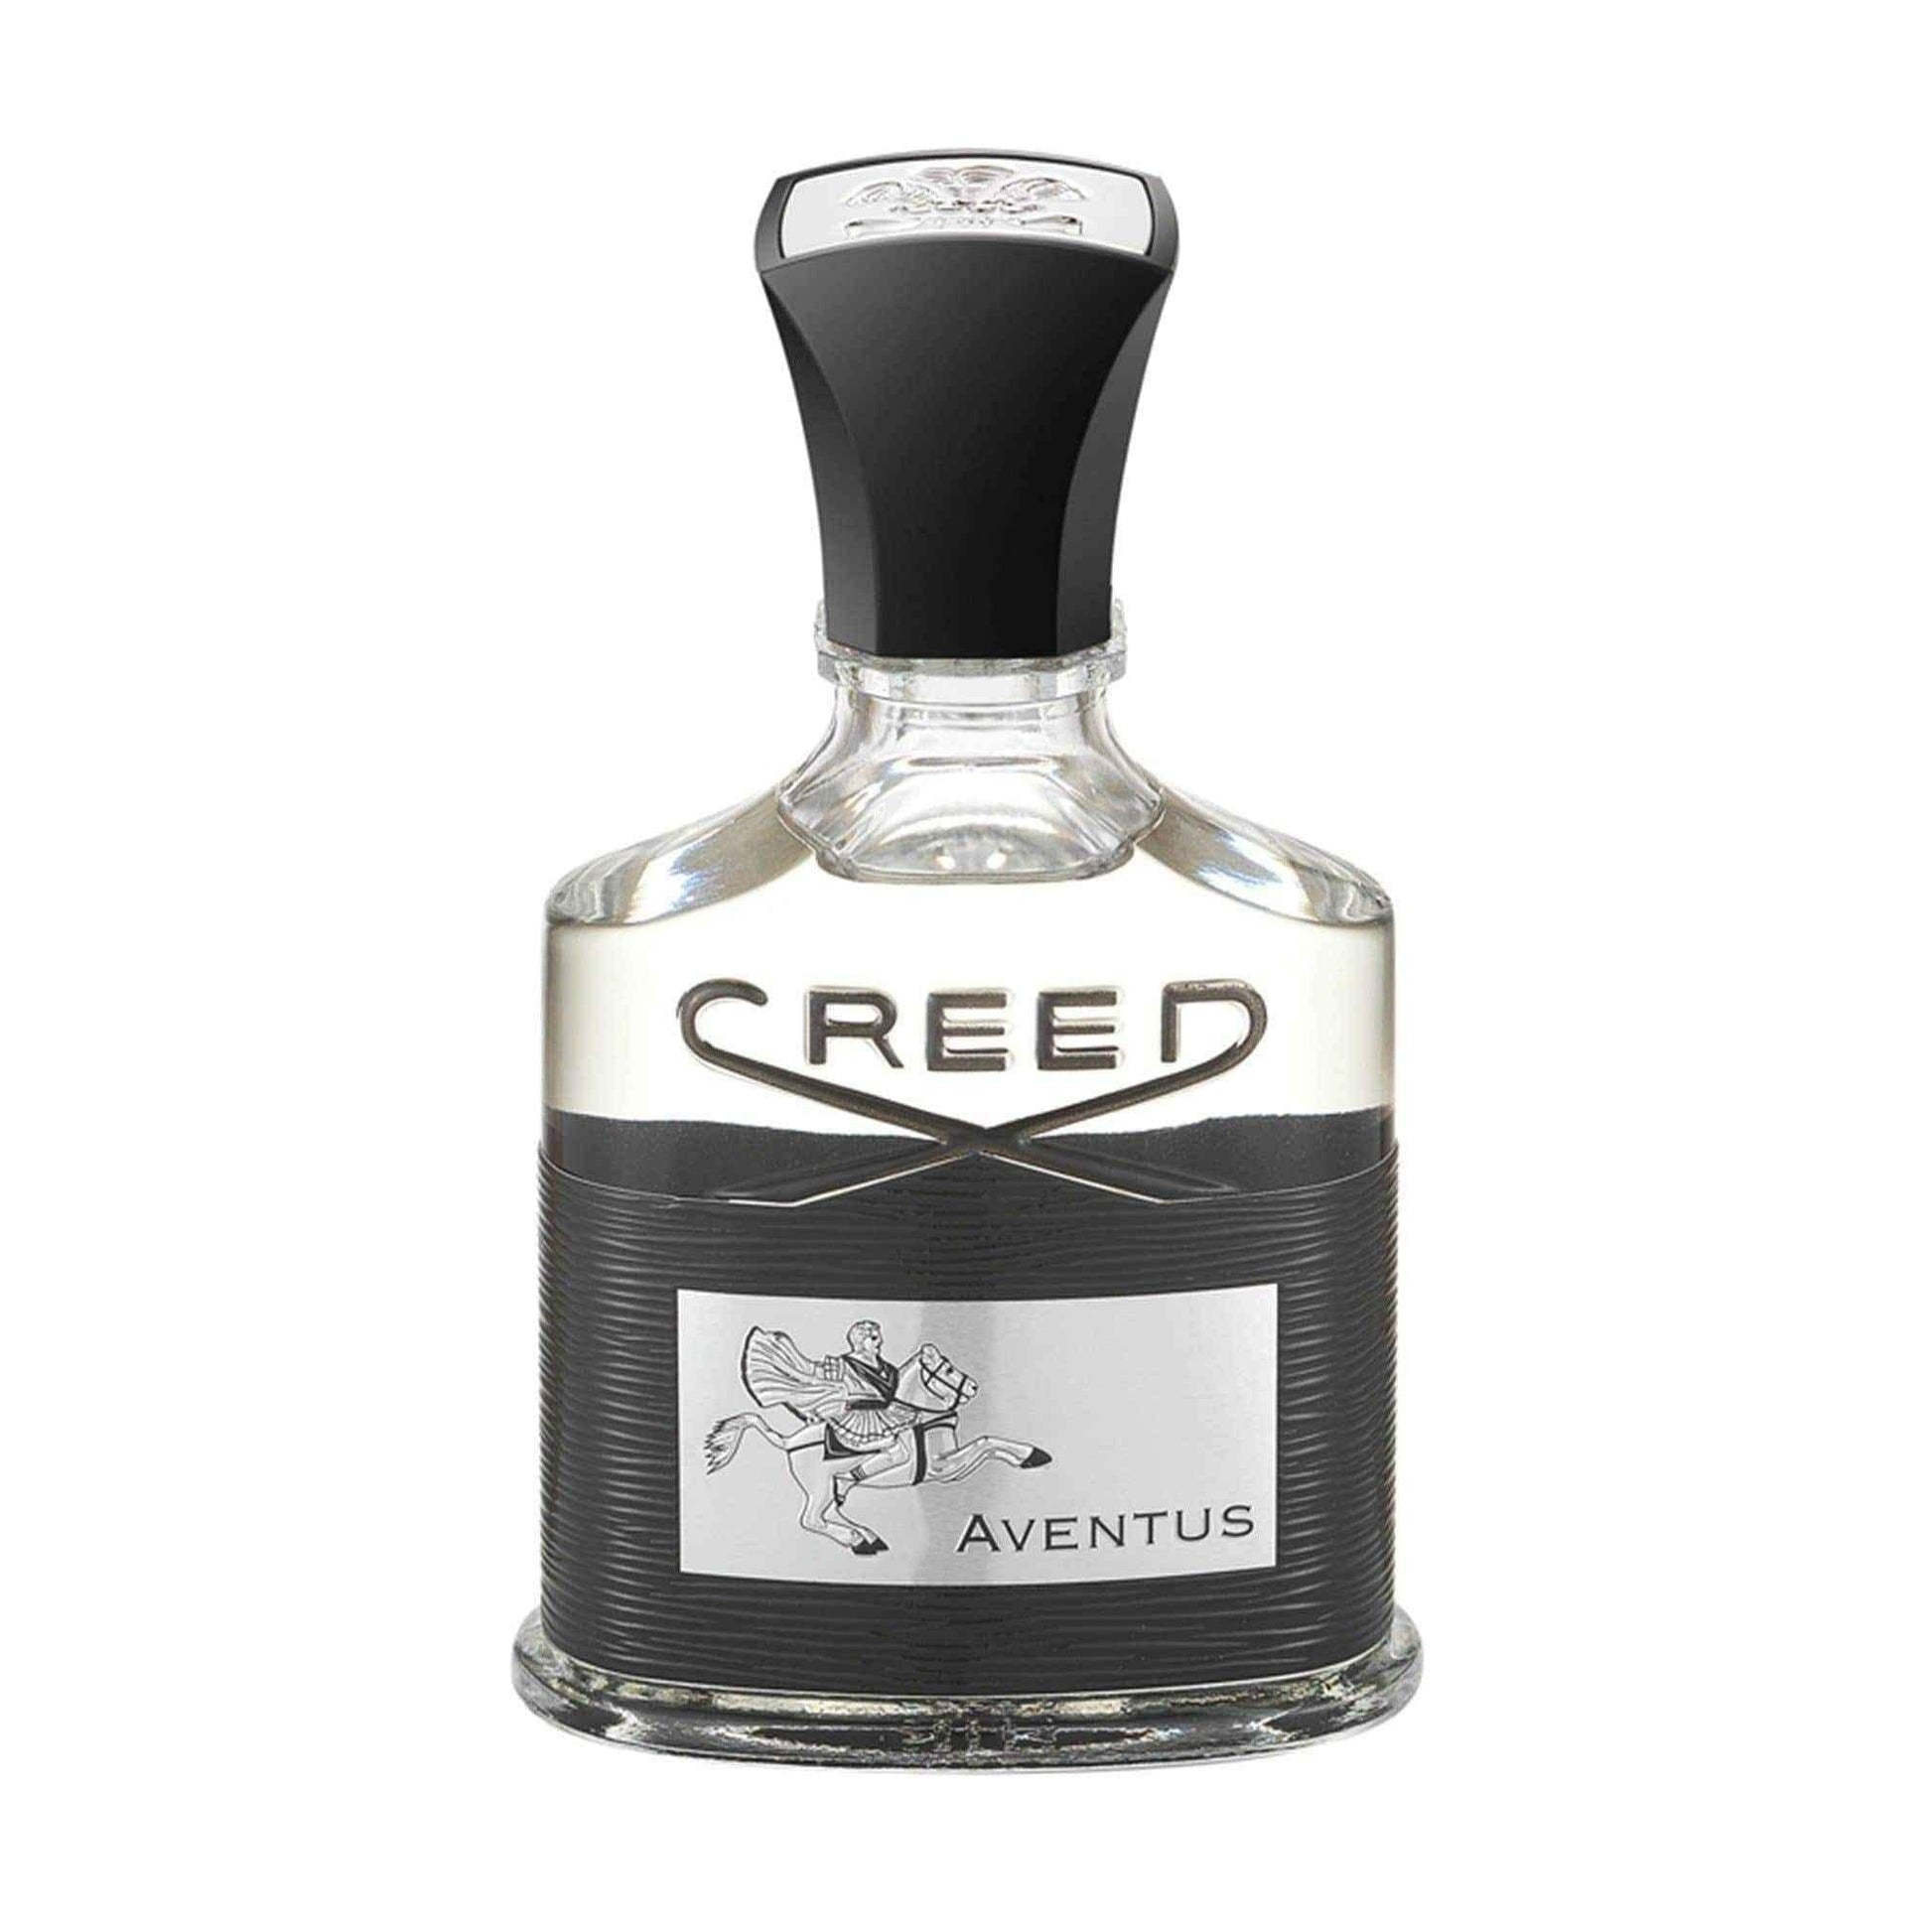 Creed Aventus Eau de Parfum 75ml Spray UK